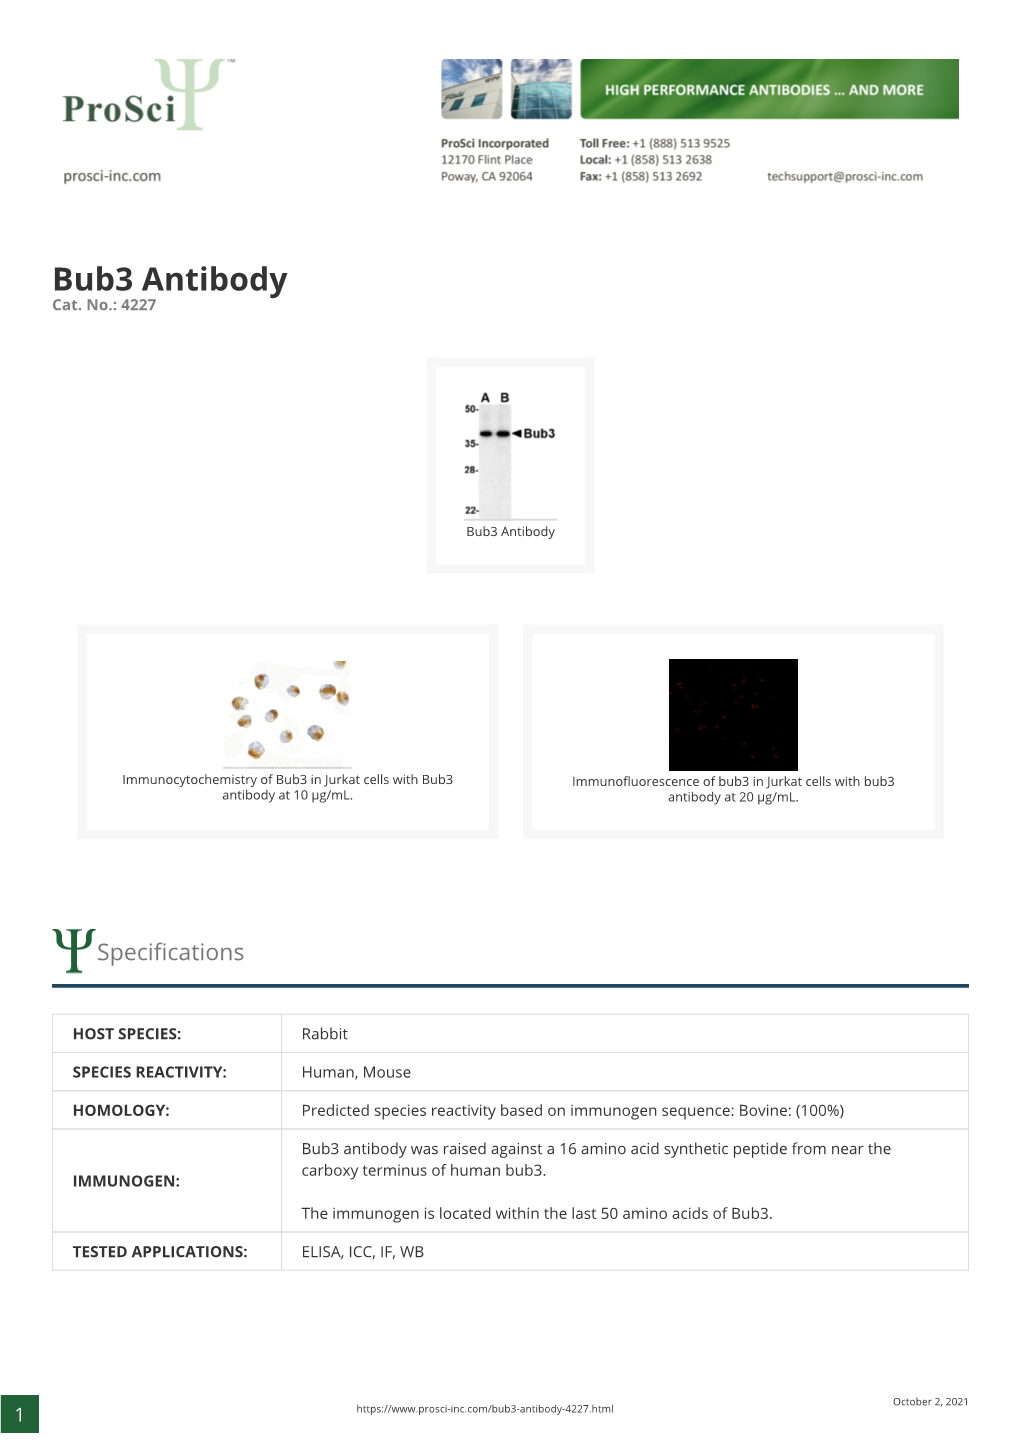 Bub3 Antibody Cat